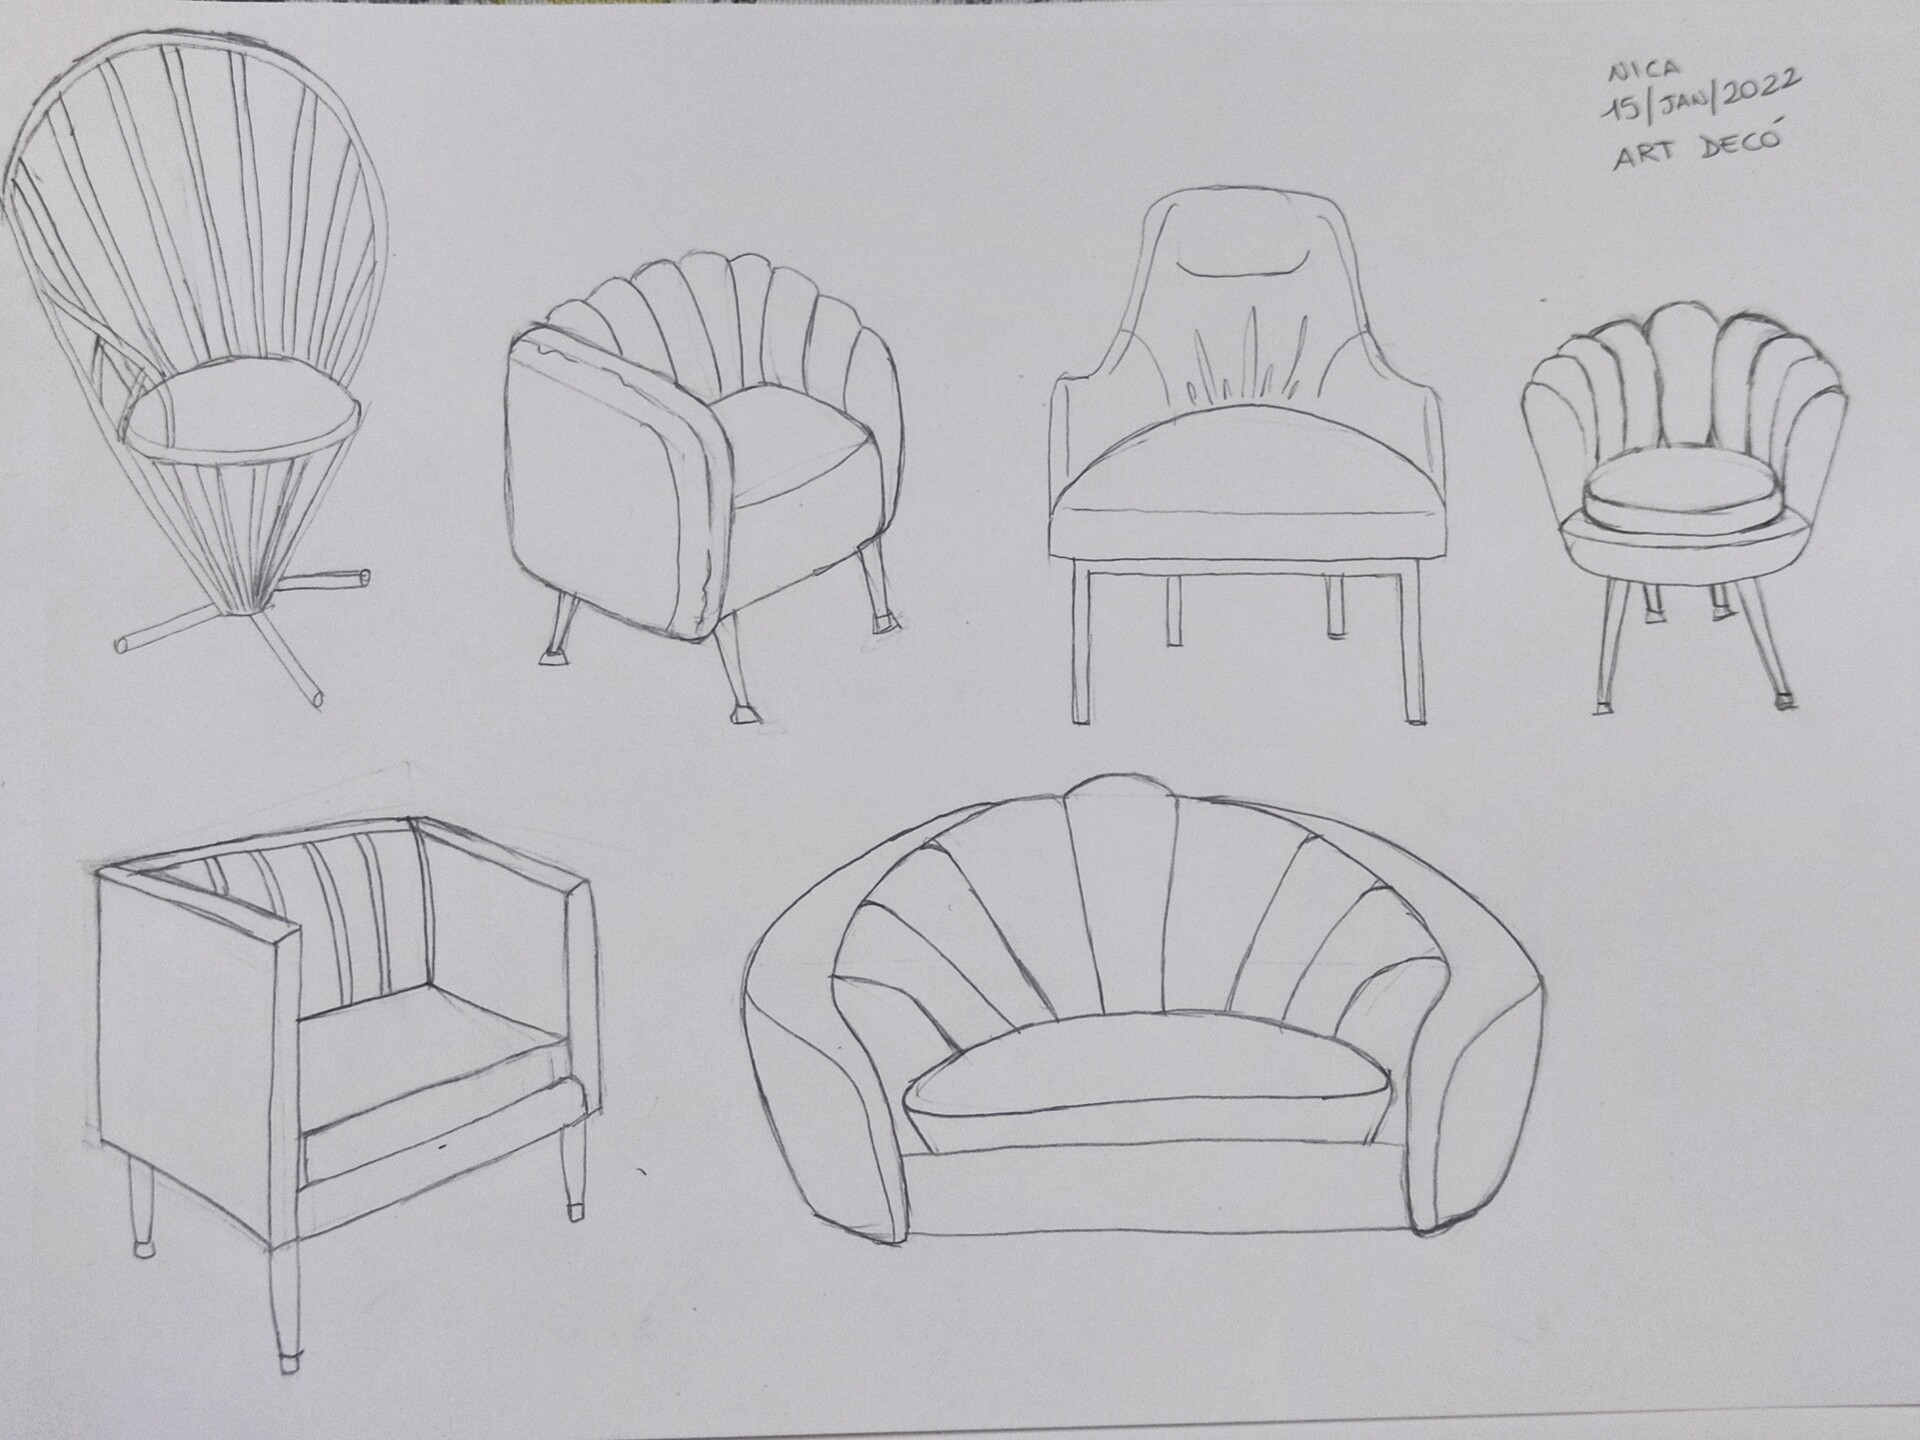 Nica Chan on Twitter Art Deco furniture sketches  sketches artdeco  furniture httpstcoPyXz6SU8iv  Twitter